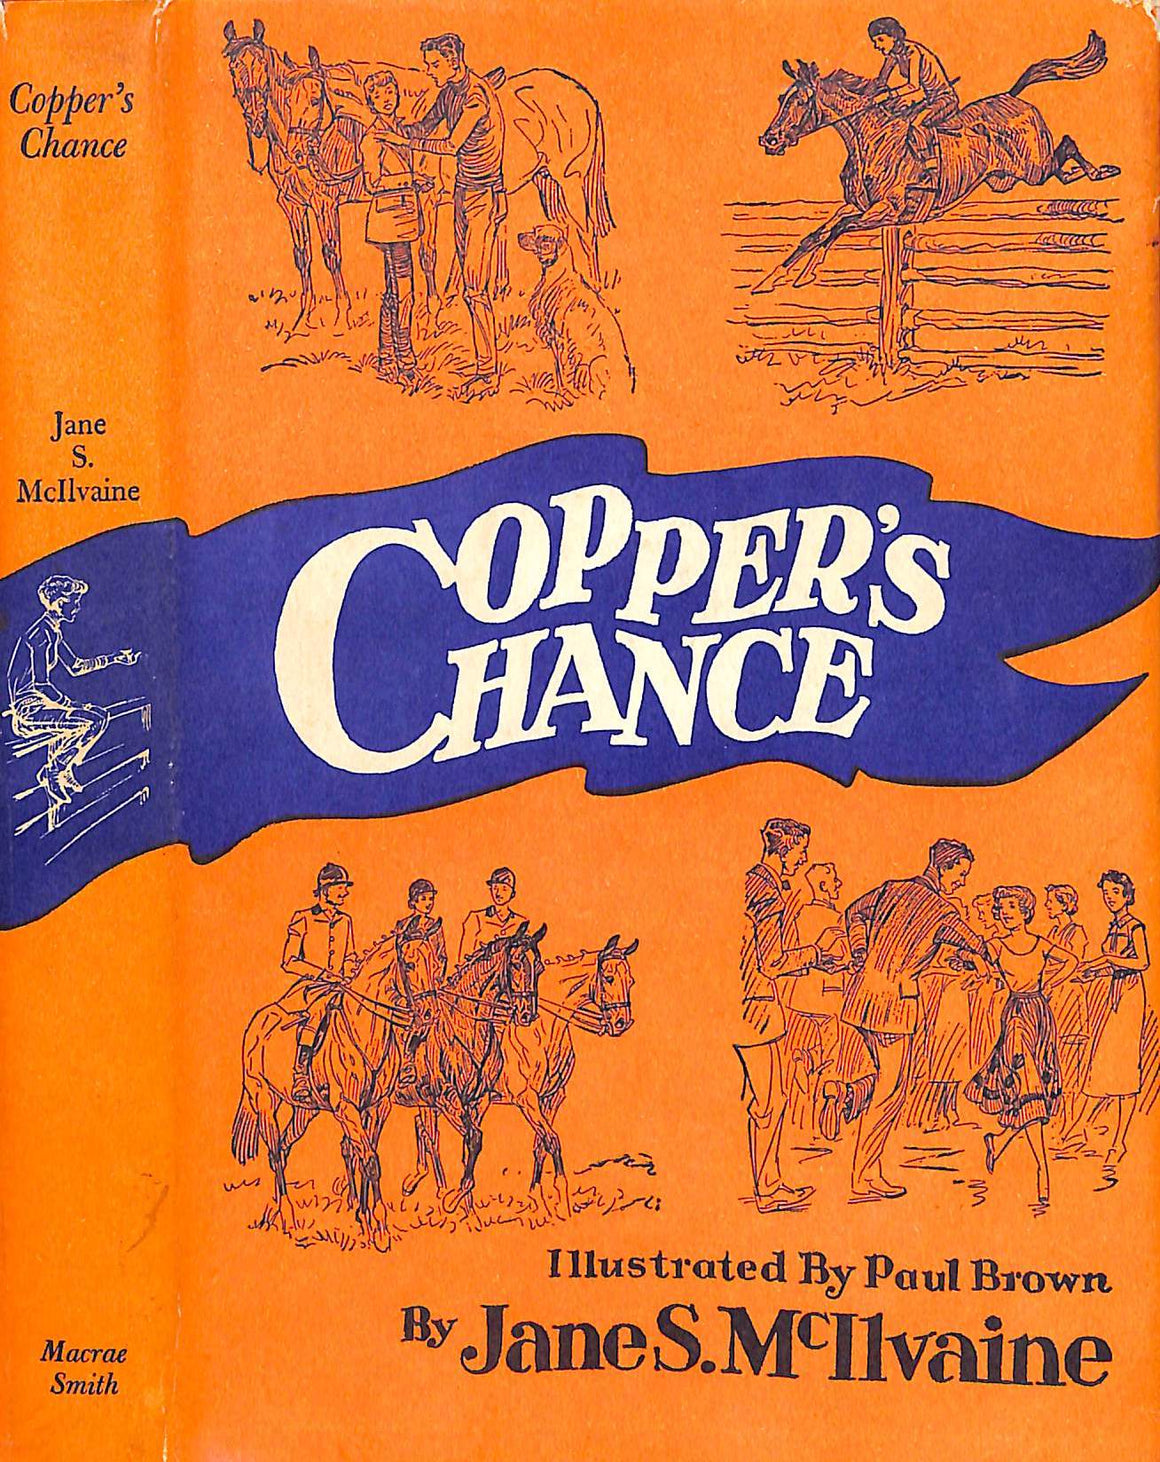 "Copper's Chance" 1951 MCILVAINE, Jane S.